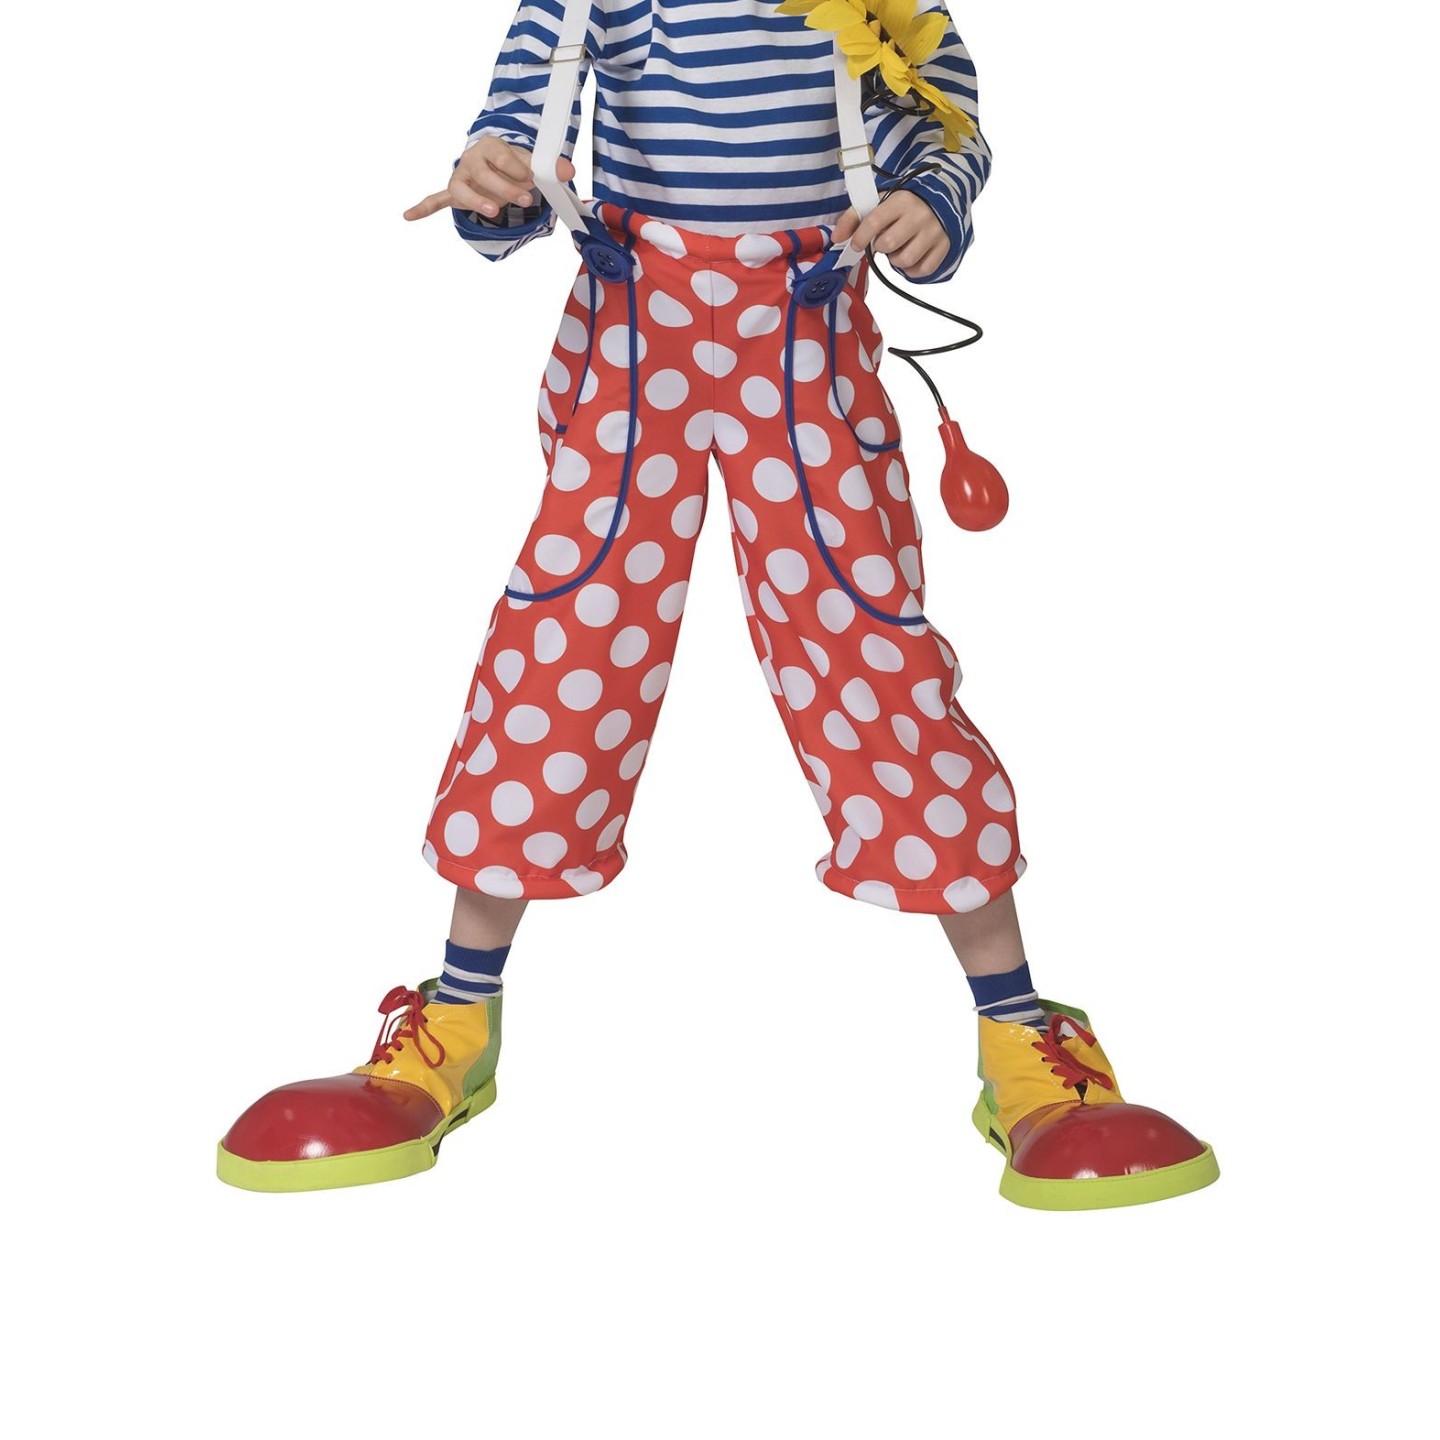 Clownsbroek kind carnaval kostuum clownspak 